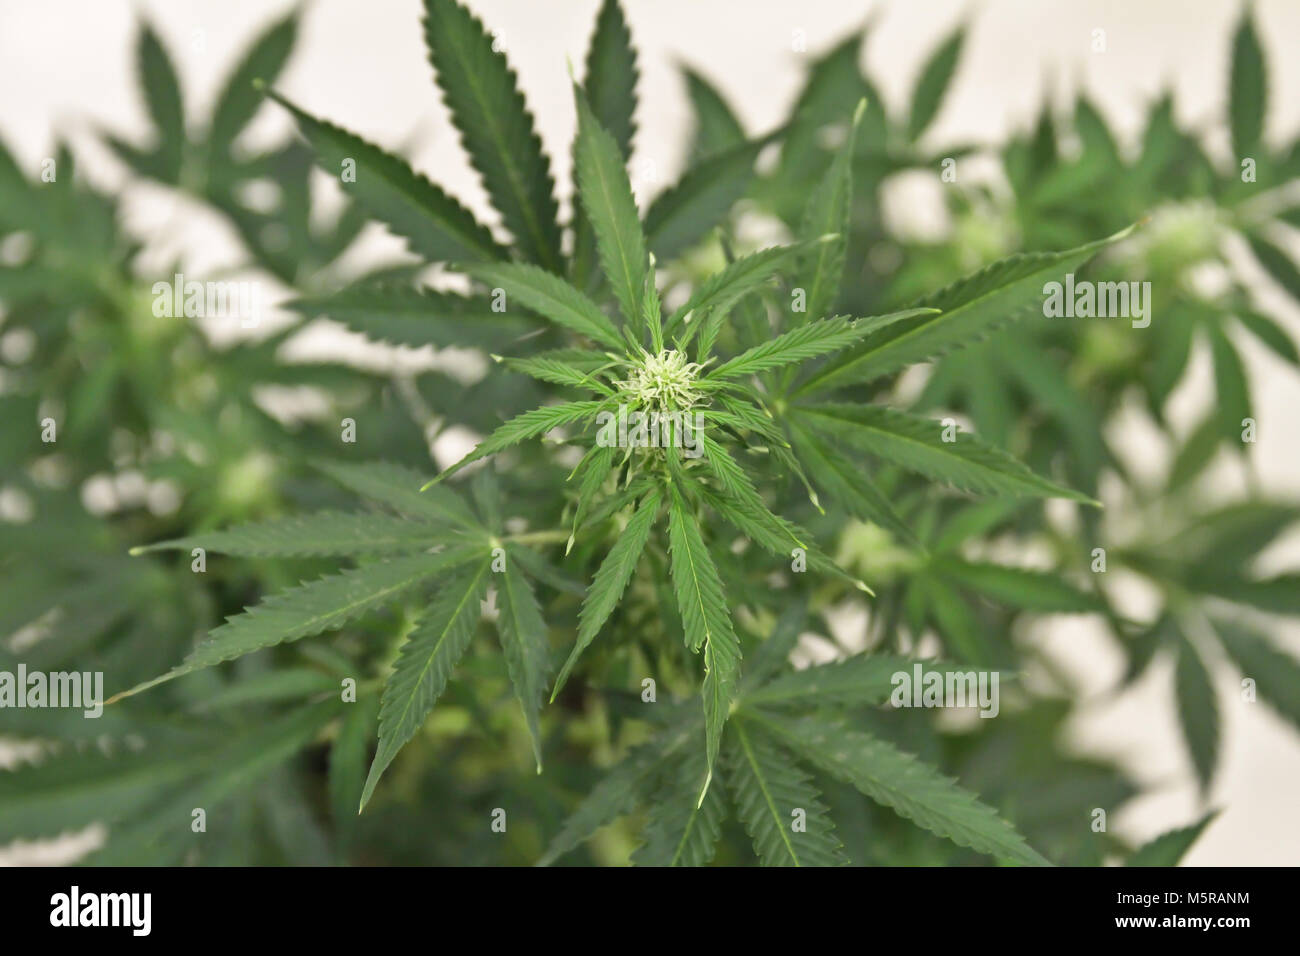 Home-grown Marihuana. Cannabis im Blumentopf. Blühende Marihuana Pflanze in der Natur Stockfoto